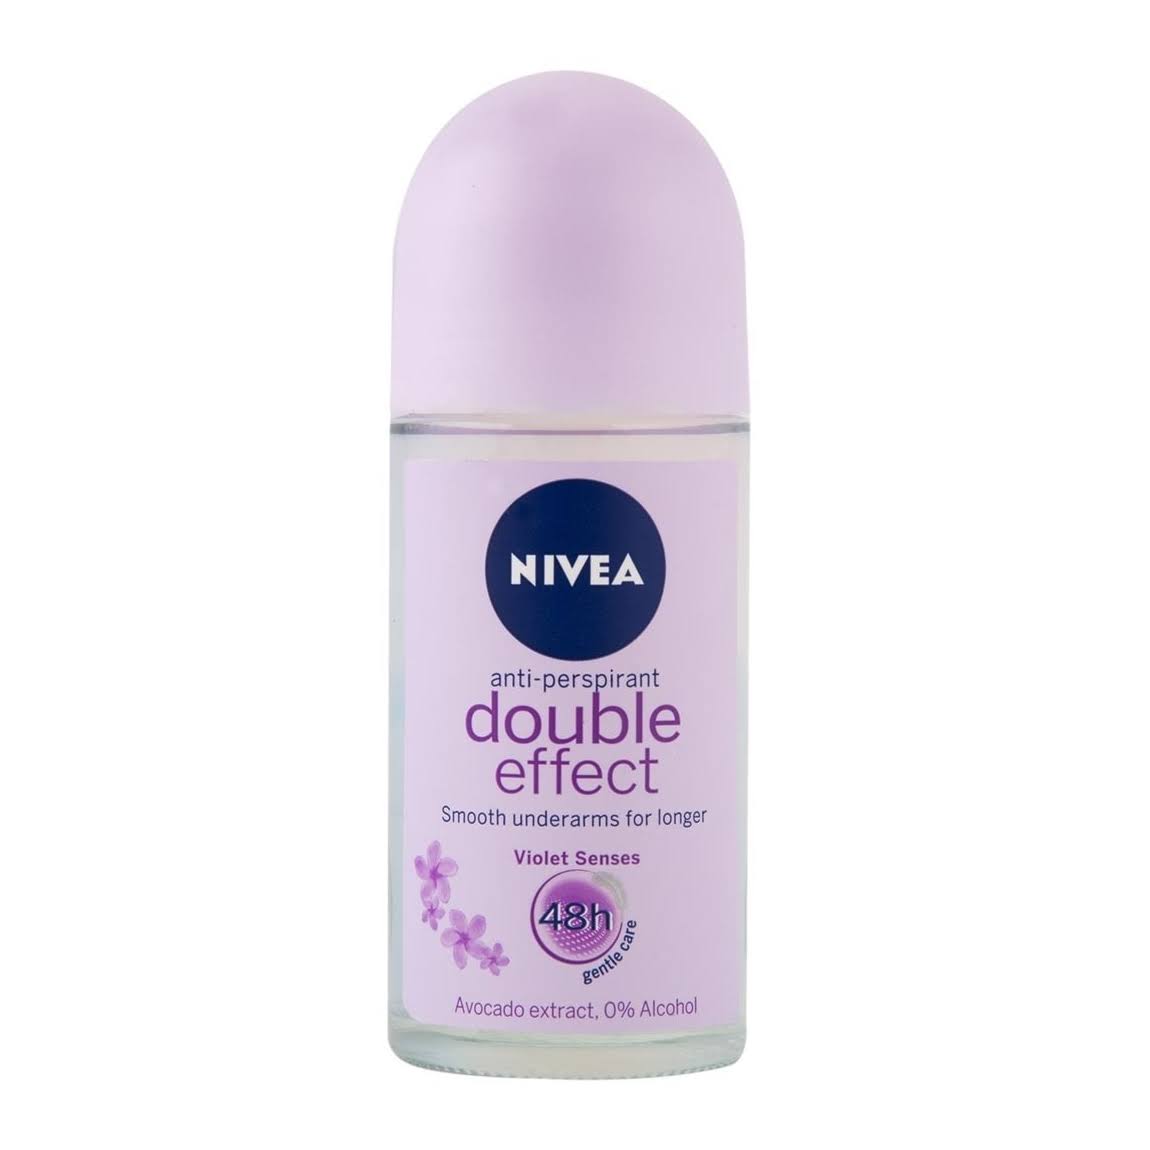 Nivea Anti Perspirant Roll On Deodorant - Double Effect, 50ml